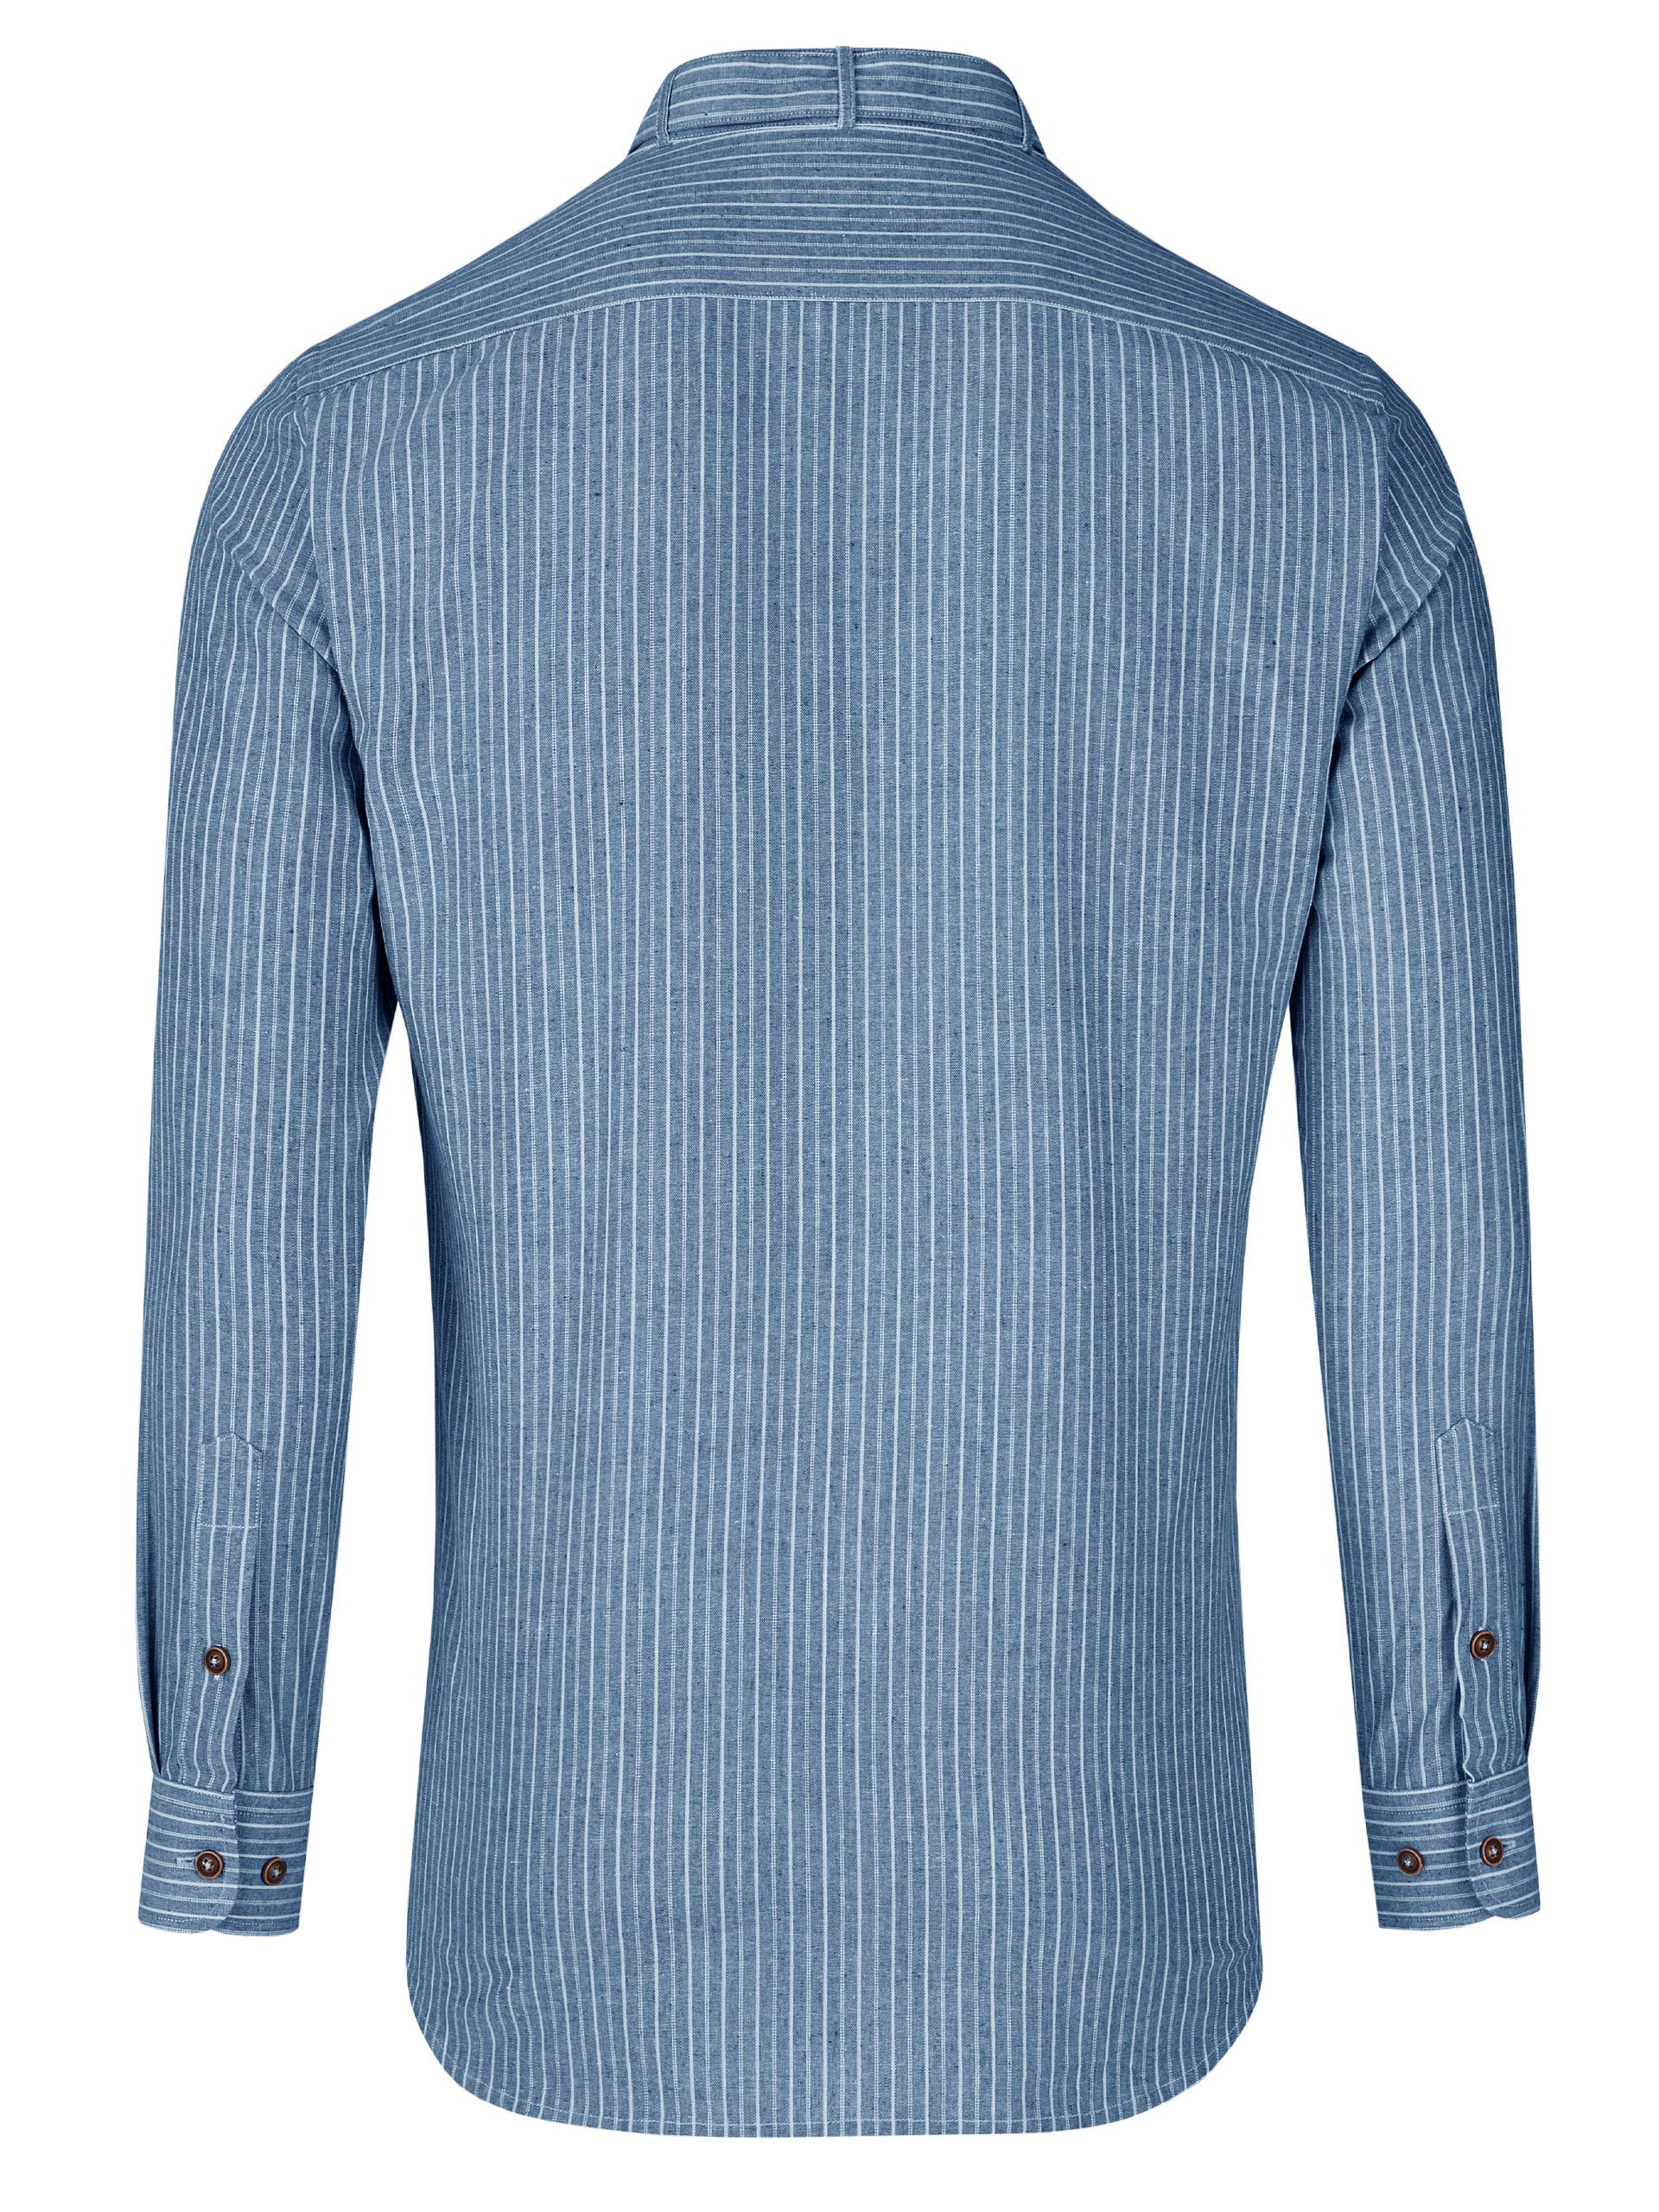 Almbock Trachtenhemd Herrenhemd Florian blau-weiß-gestreift